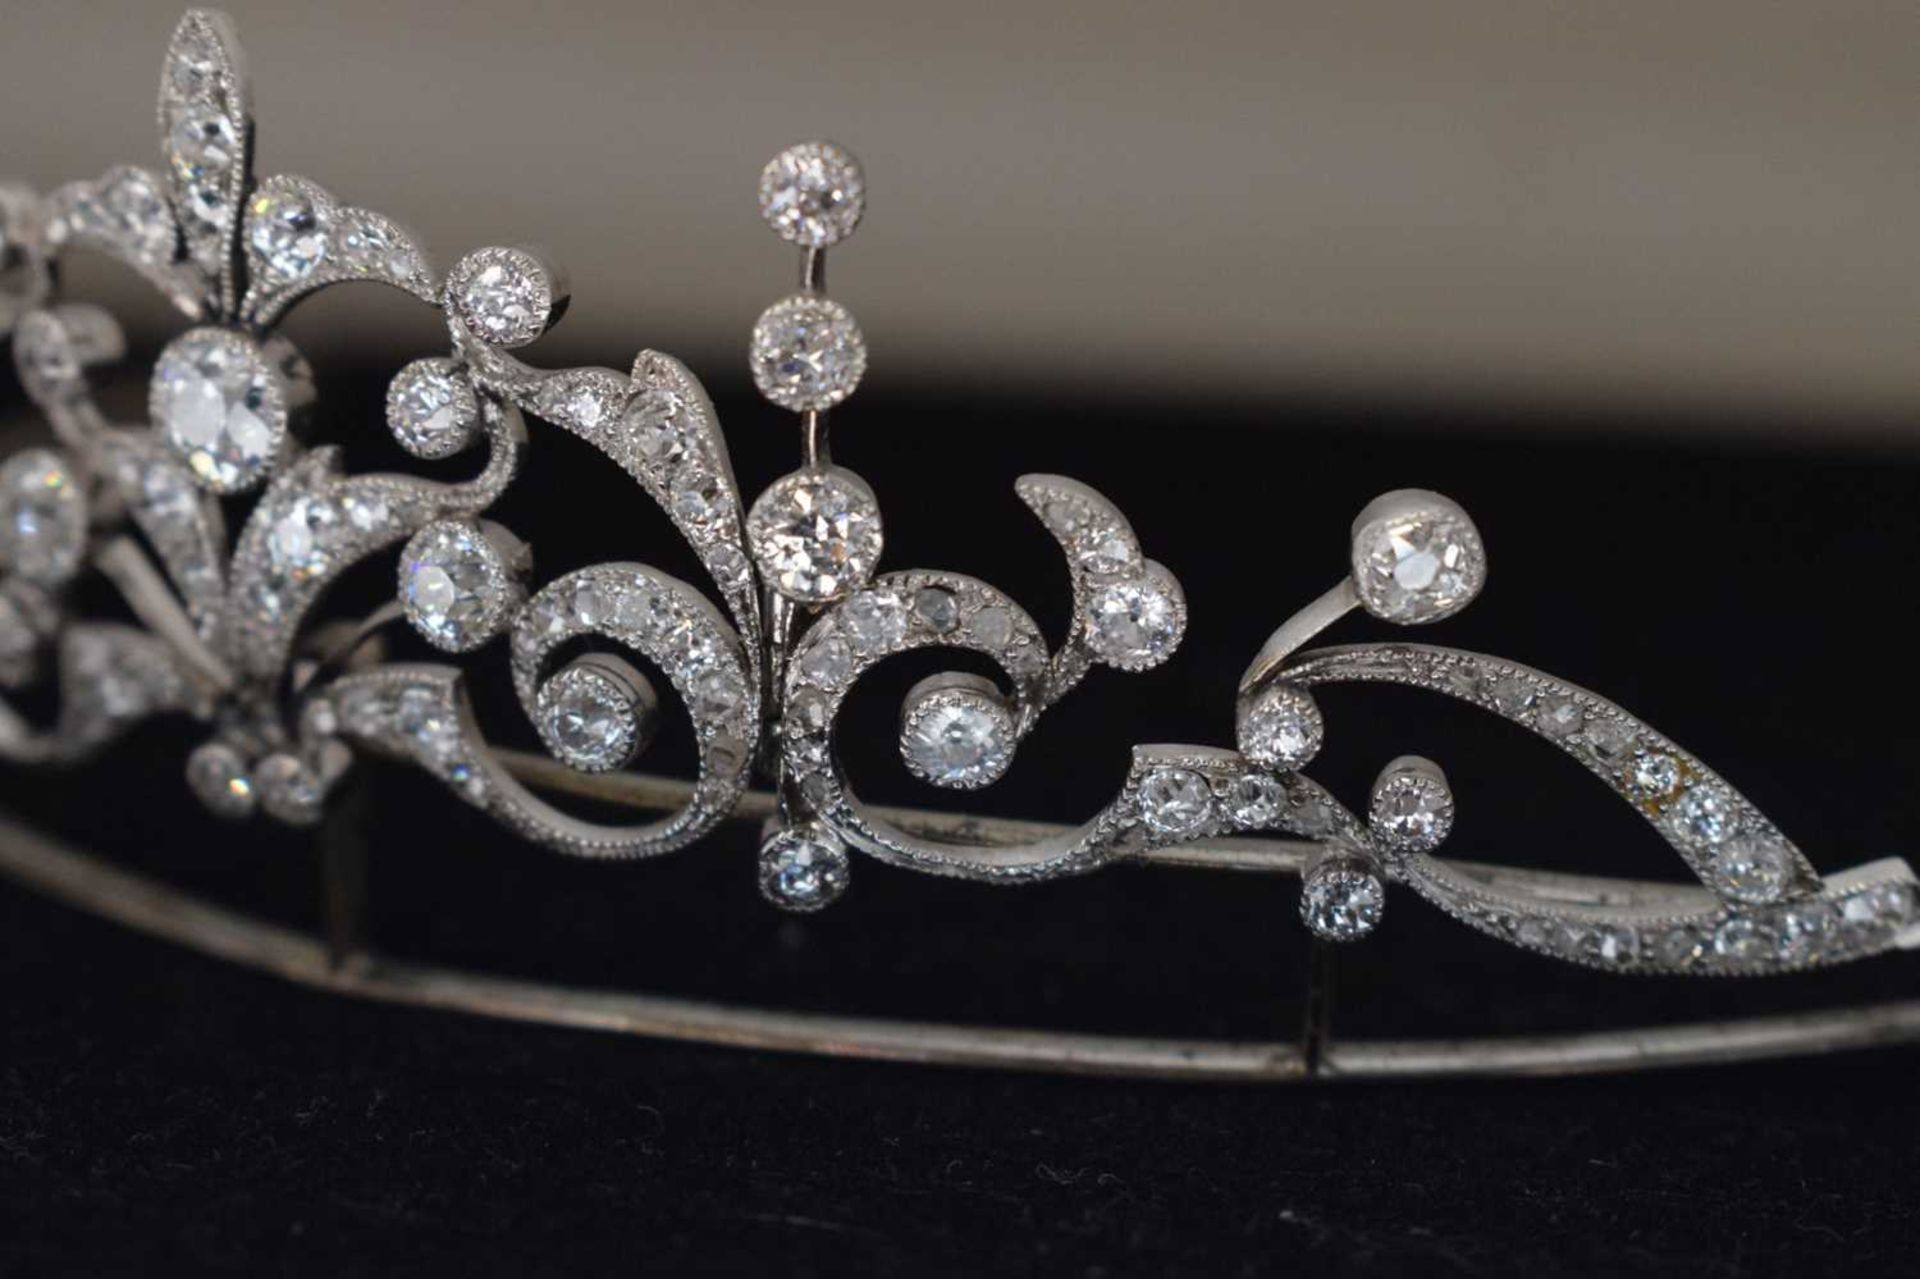 Early 20th century Belle Époque diamond tiara - Image 8 of 37